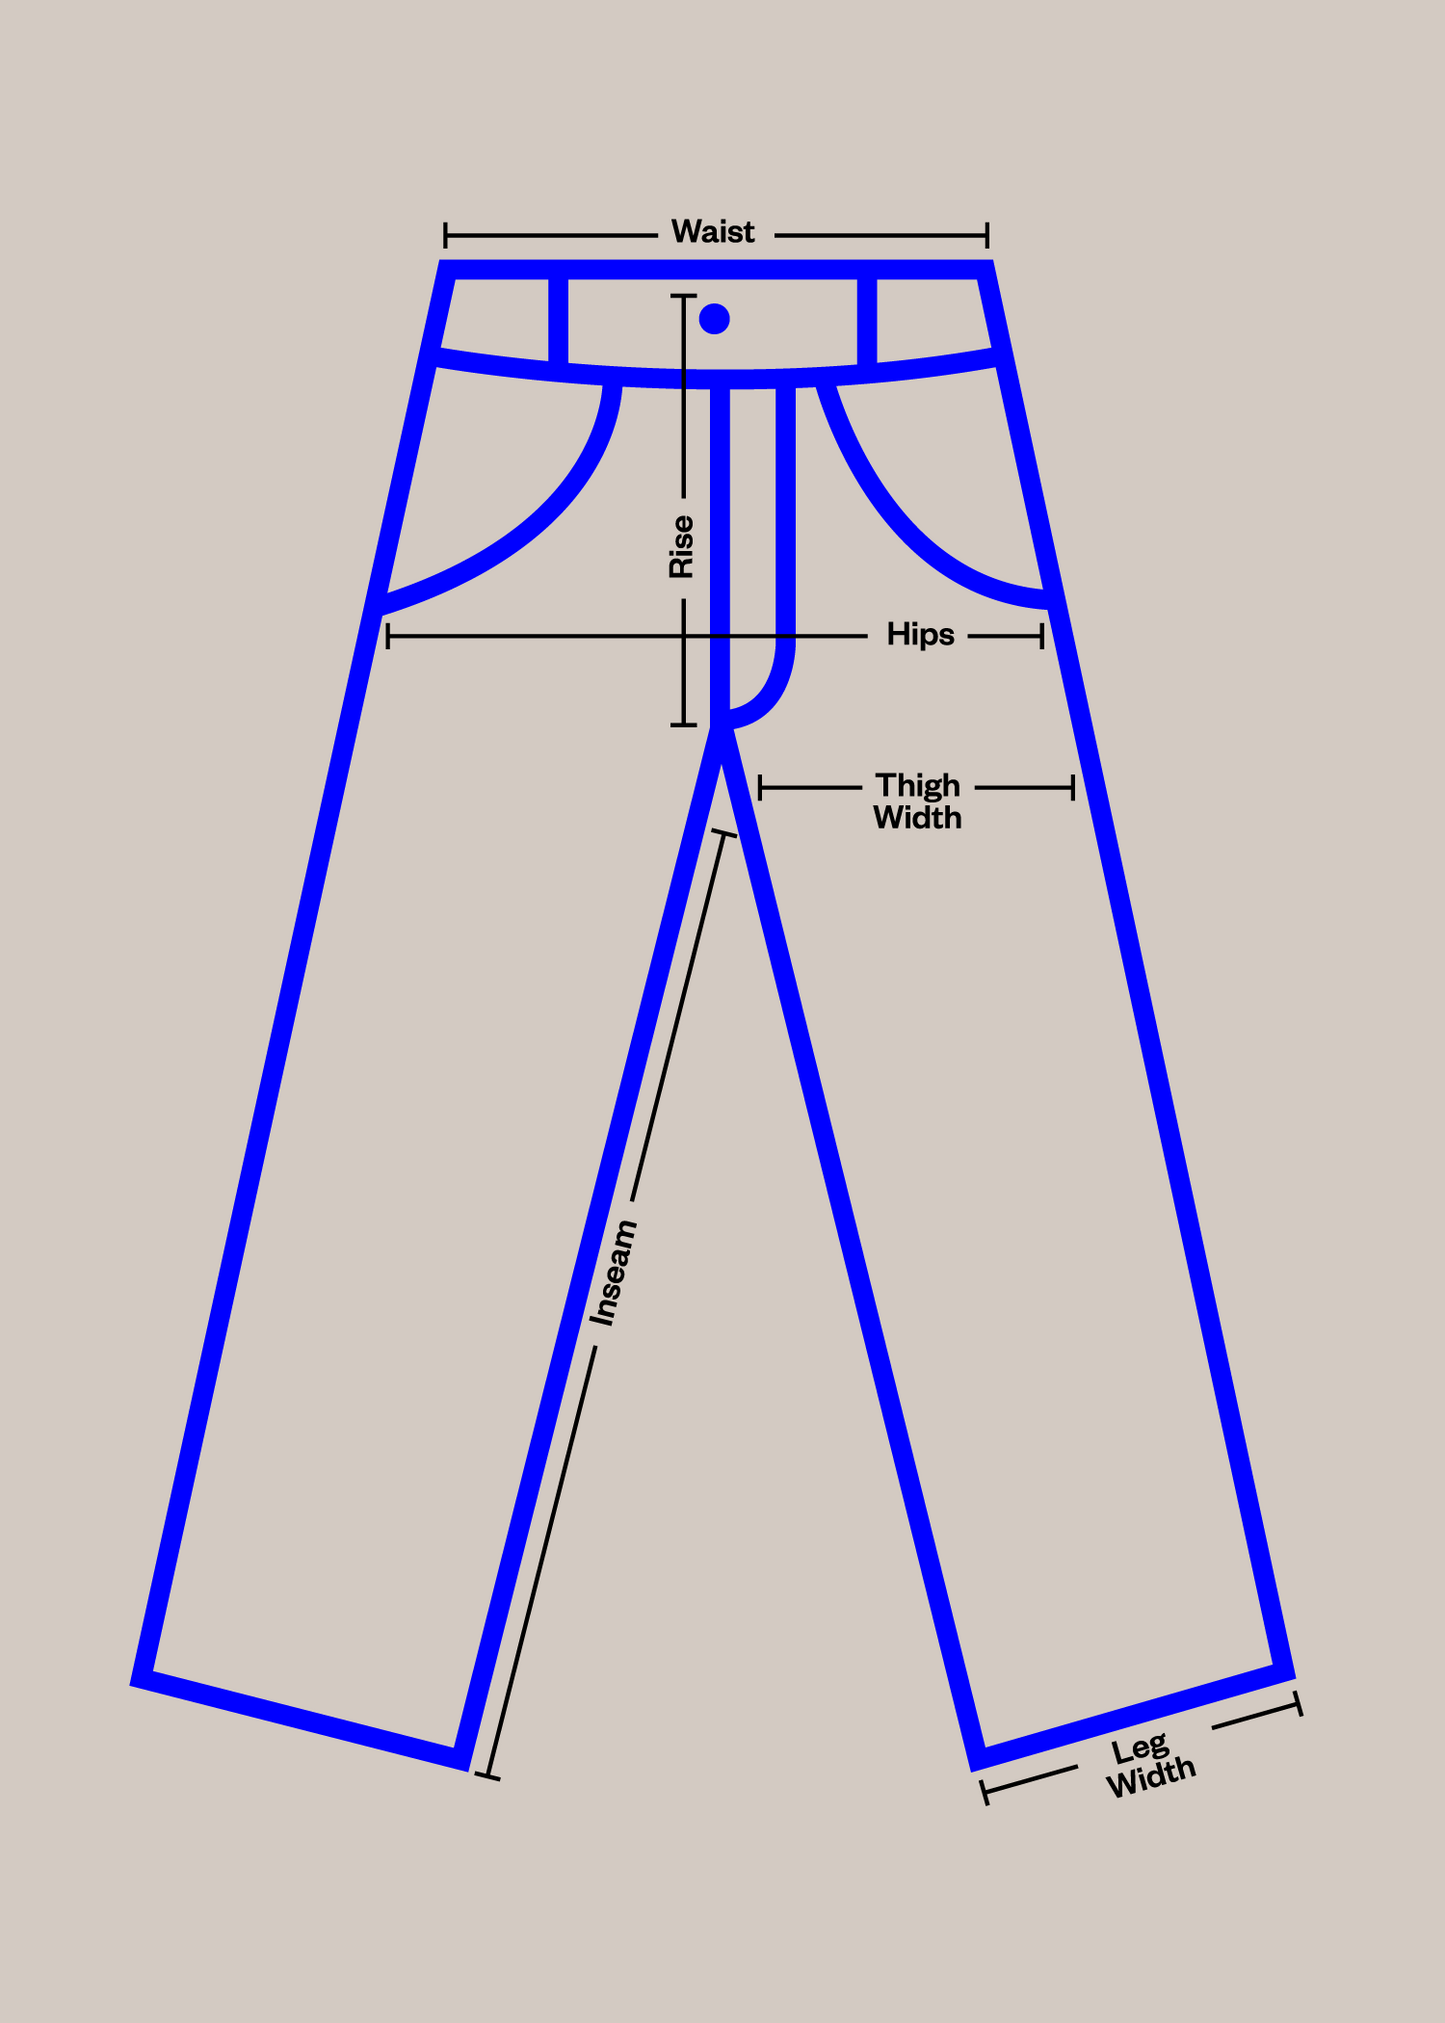 1980s Cepovett French Workwear Chore Pants Size Women's 32 Men's 34